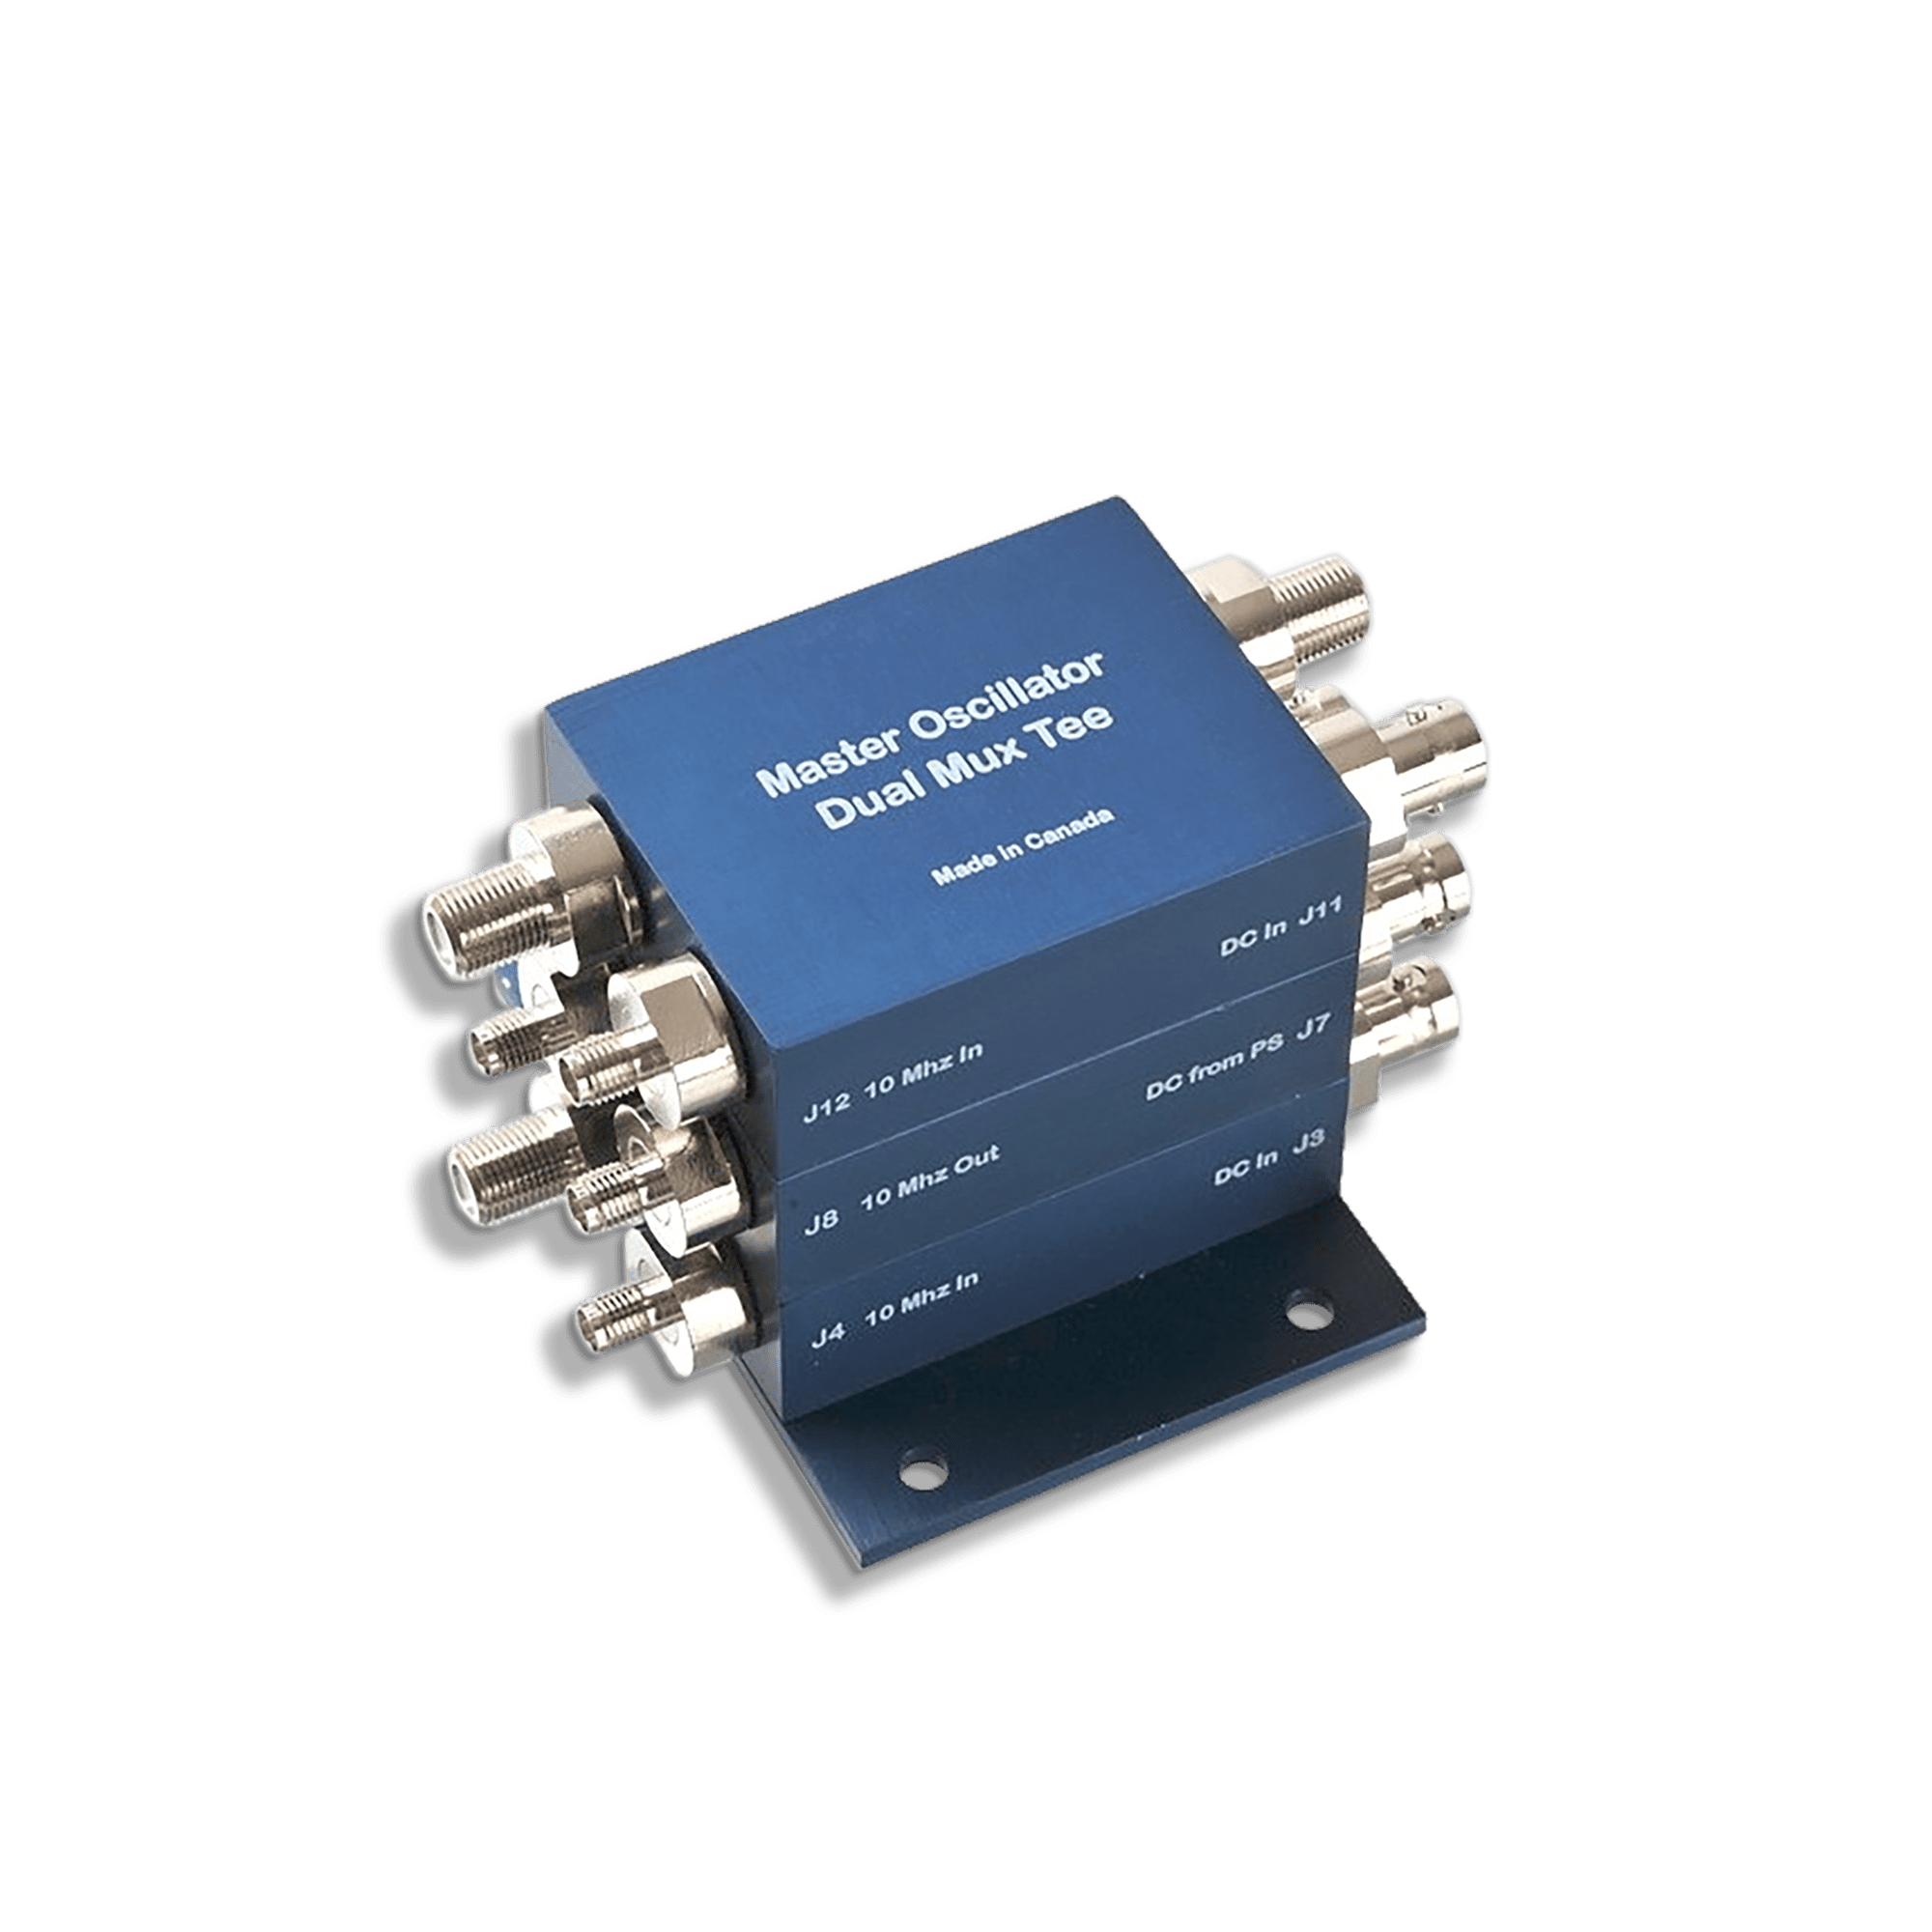 Satellite Communication Master Oscillator with Dual Mux Tee